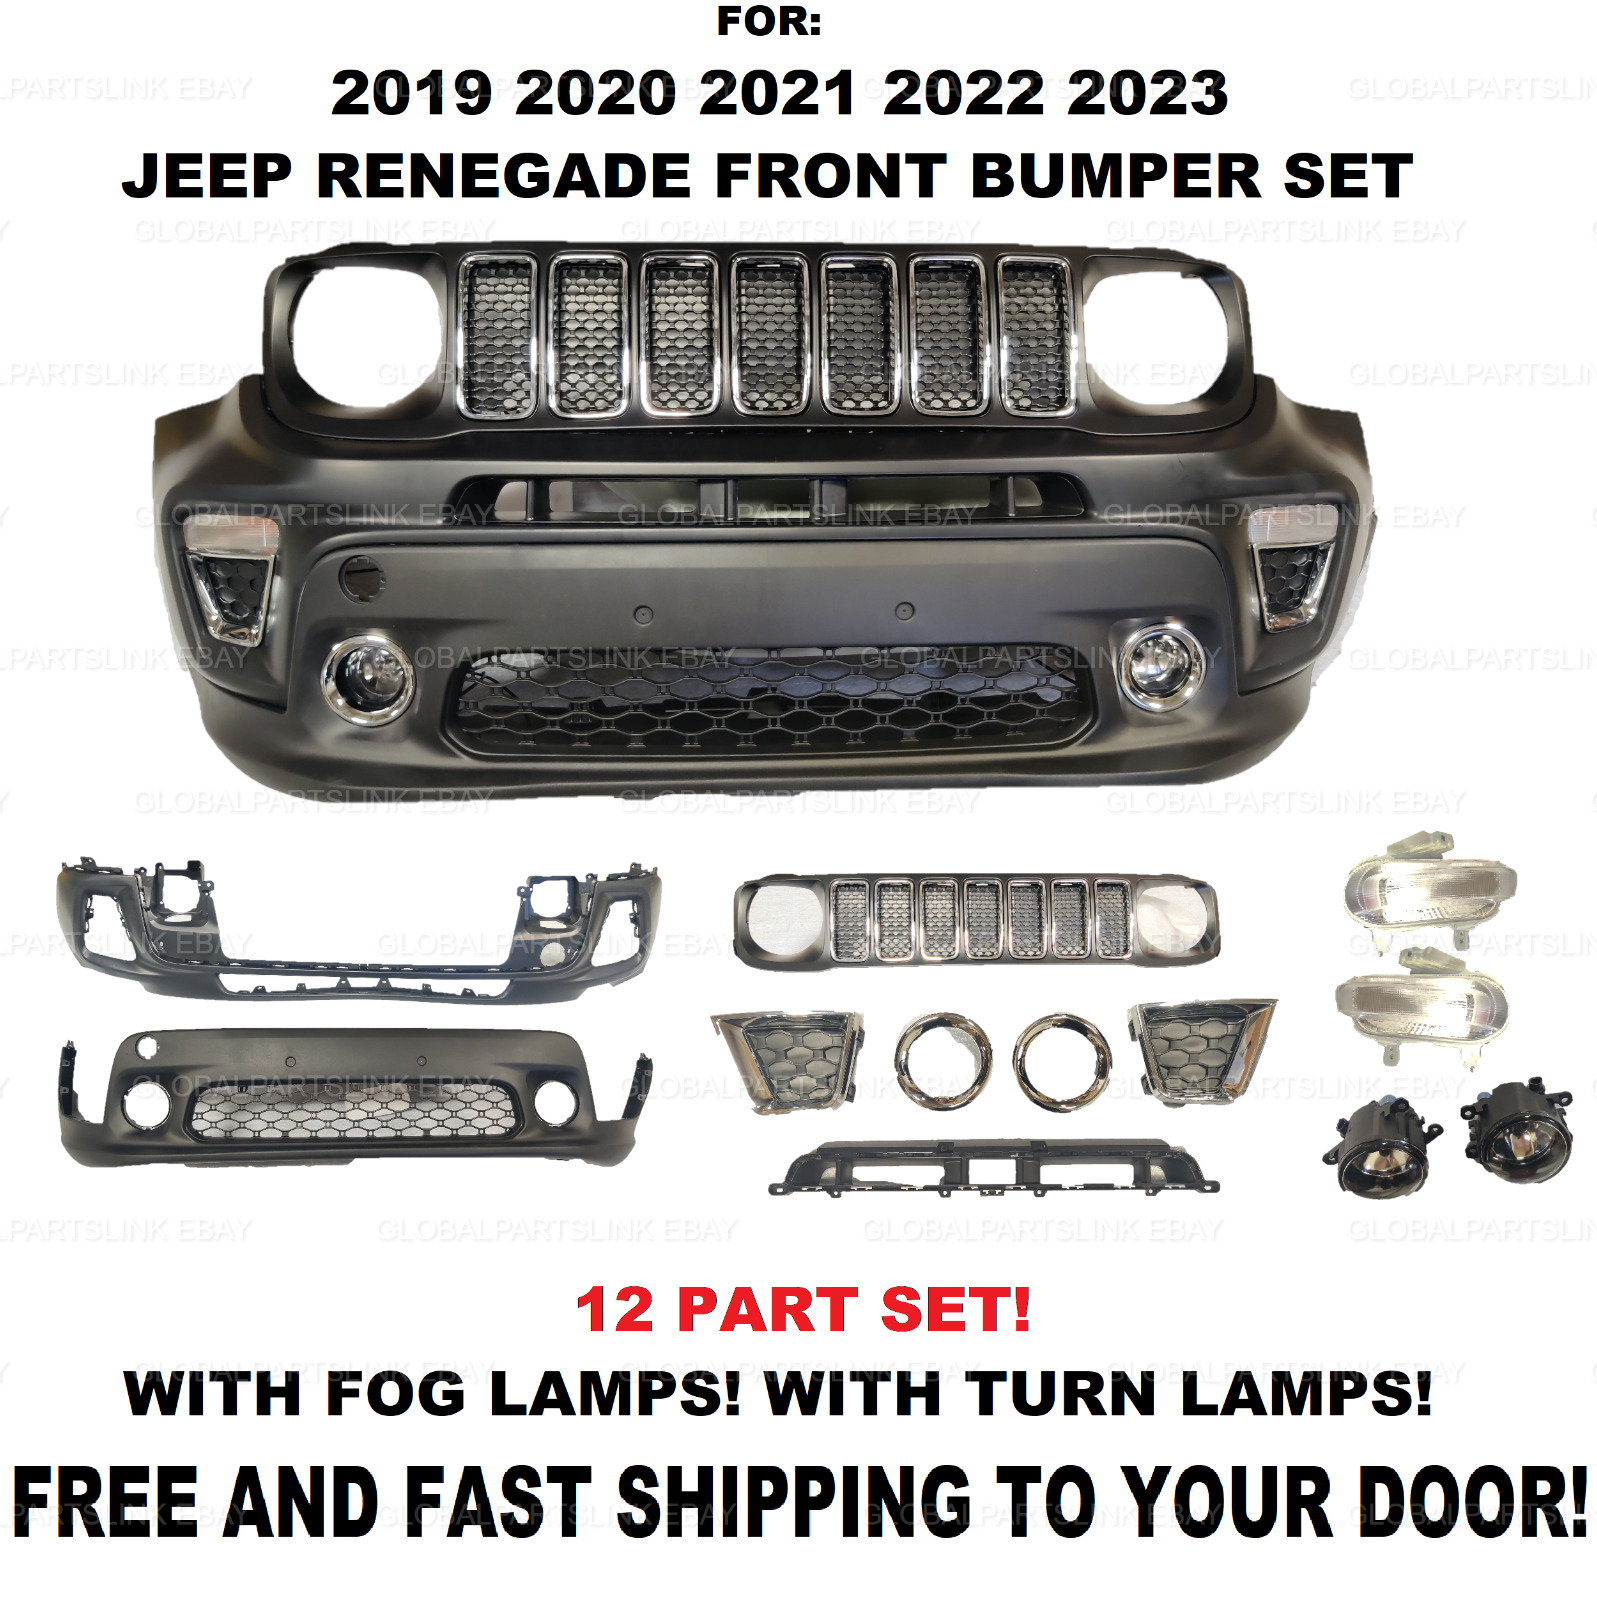 FOR 2019 2020 2021 2022 2023 jeep renegade front bumper SET GRILL FOG LIGHTS